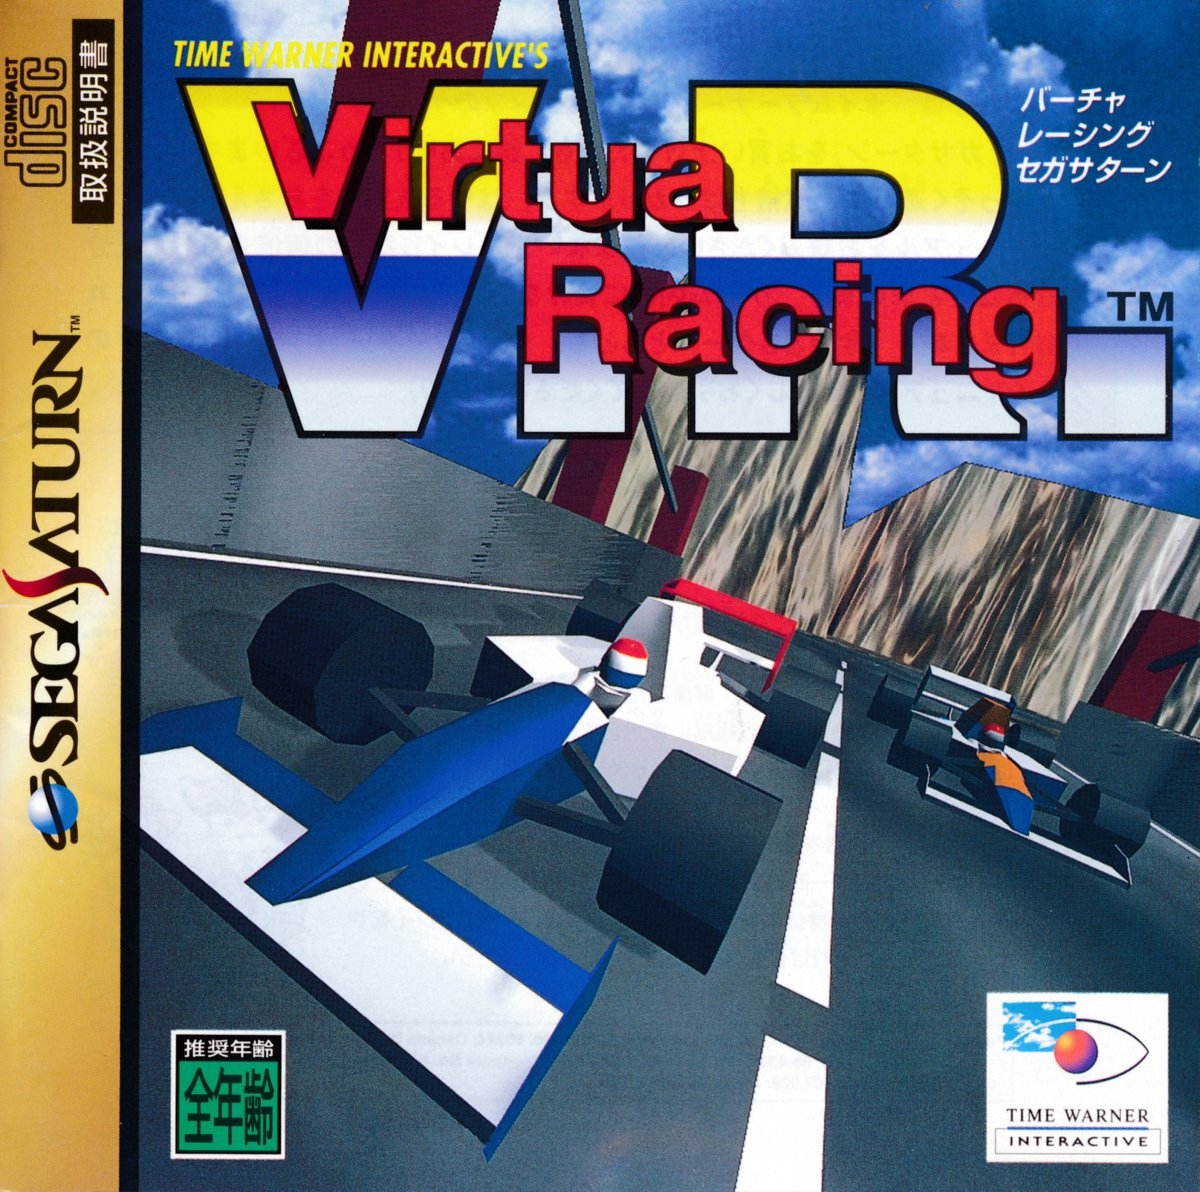 Time Warner Interactives VR Virtua Racing cover